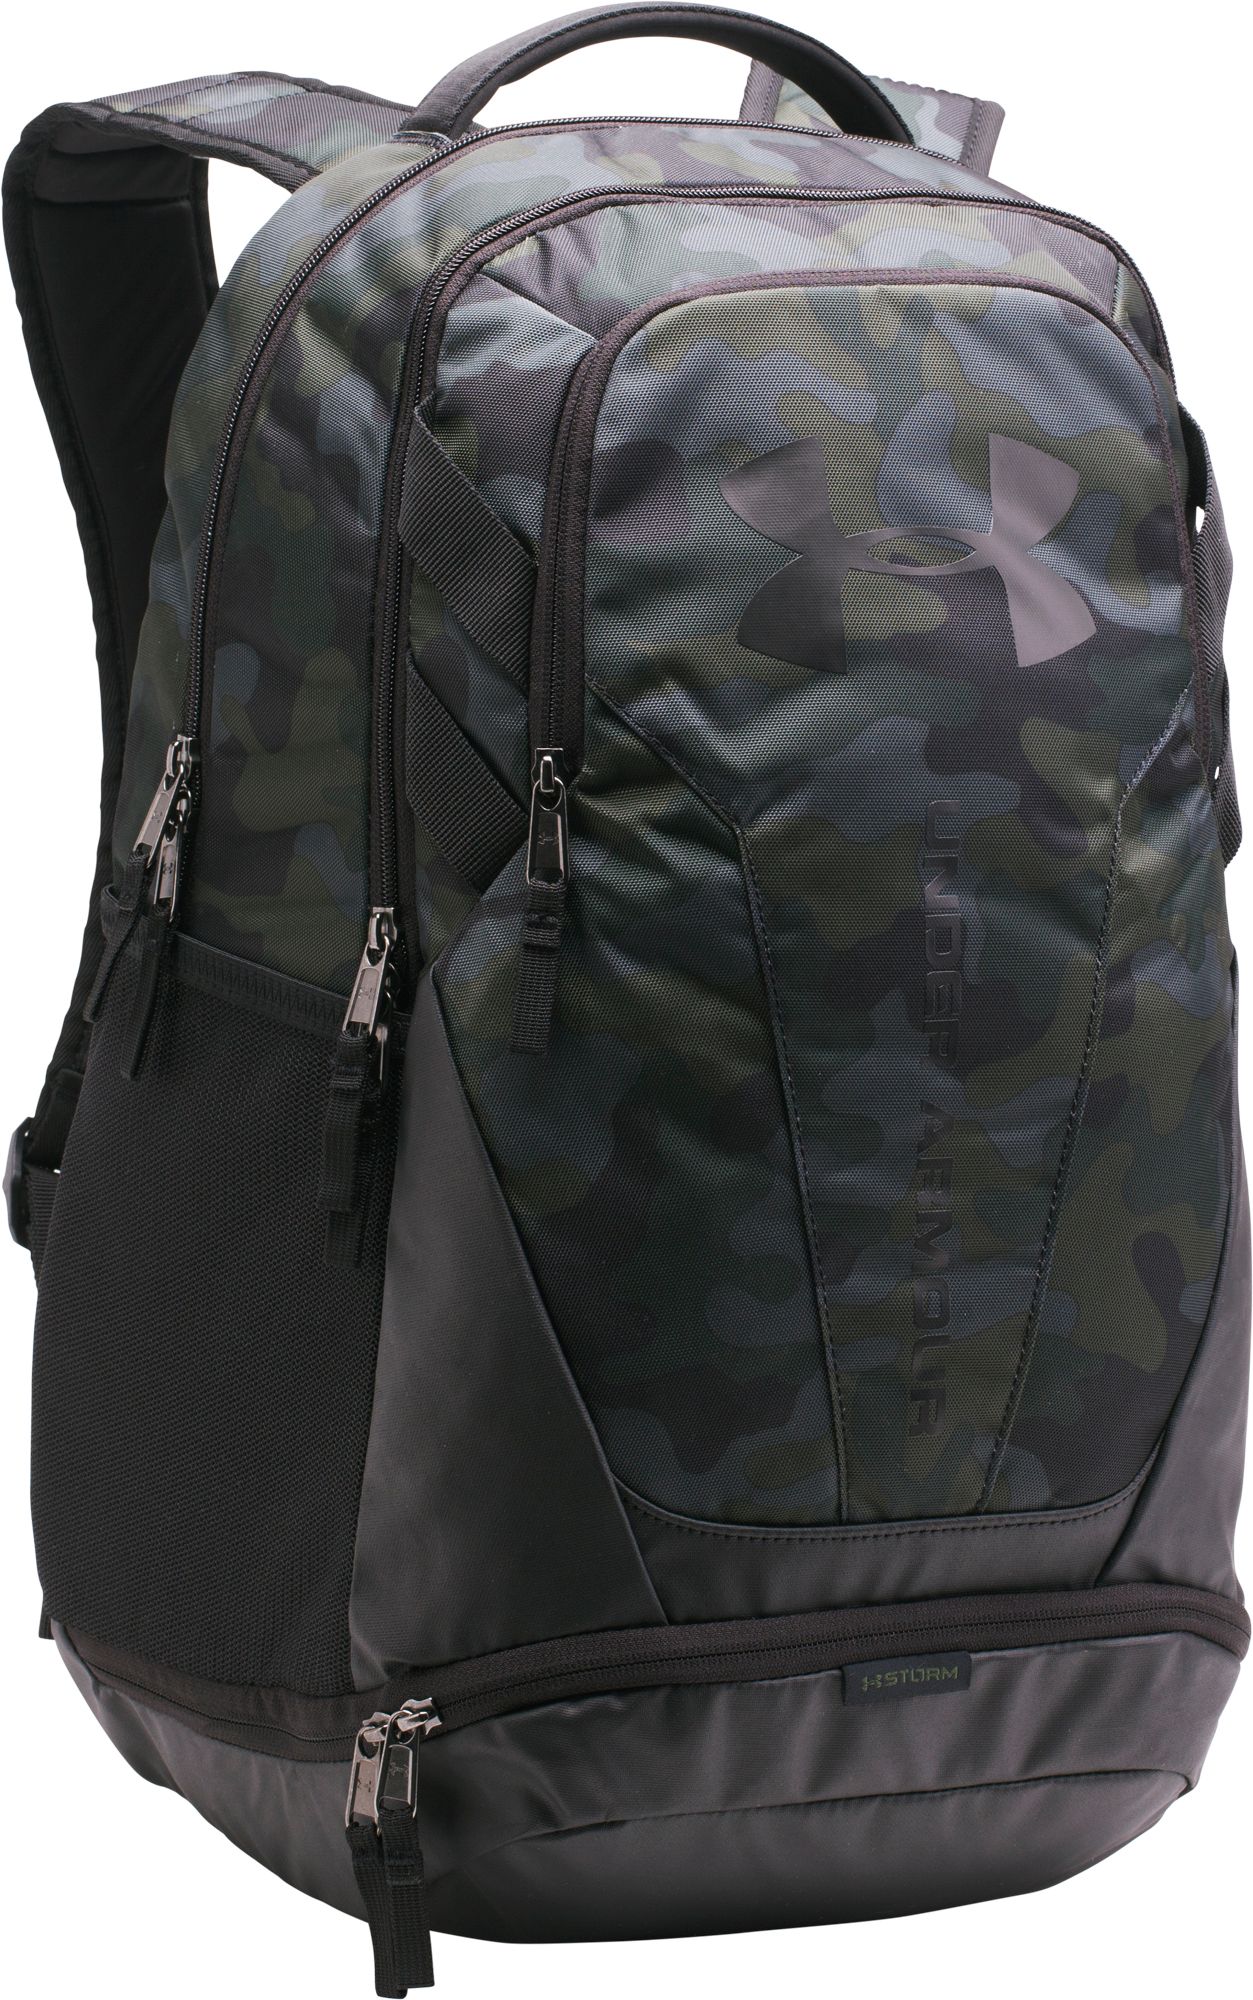 hustle 3.0 under armour backpack